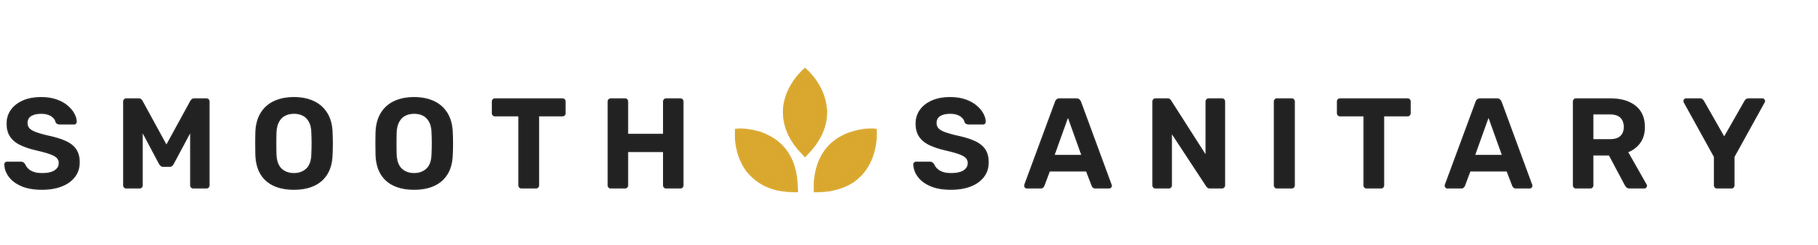 smooth sanitary logo